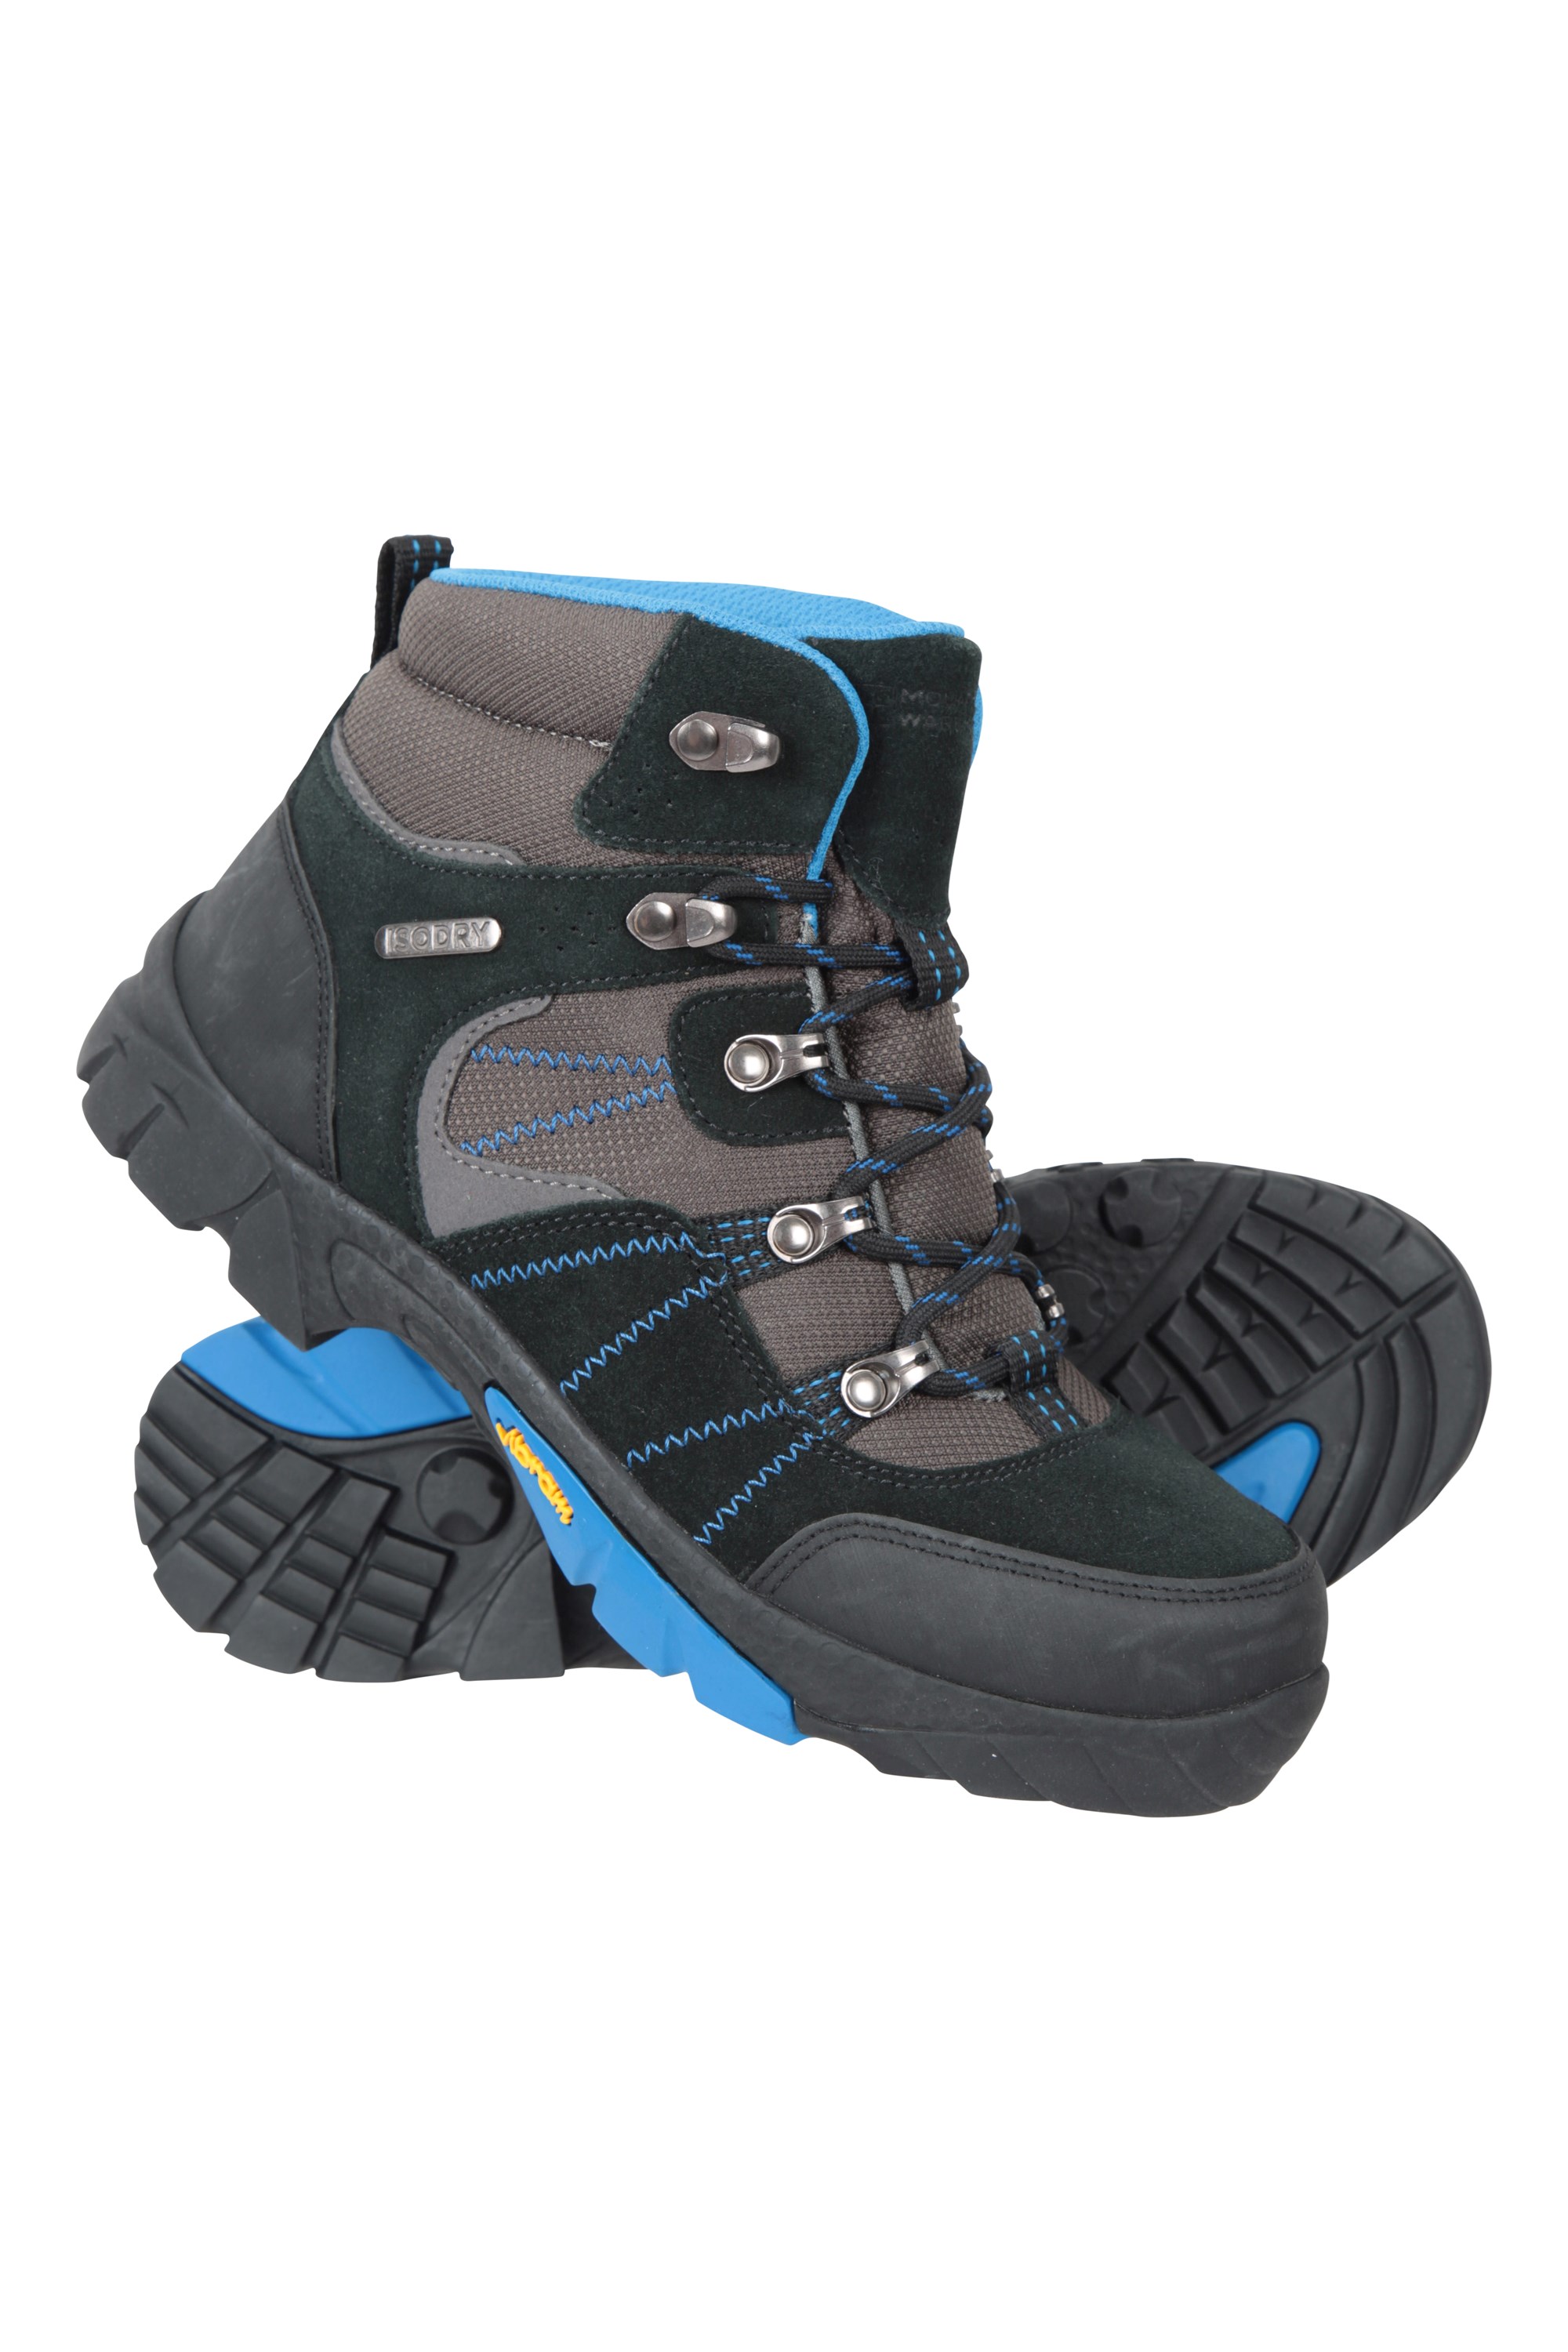 Edinburgh Vibram Kids Waterproof Hiking Boots